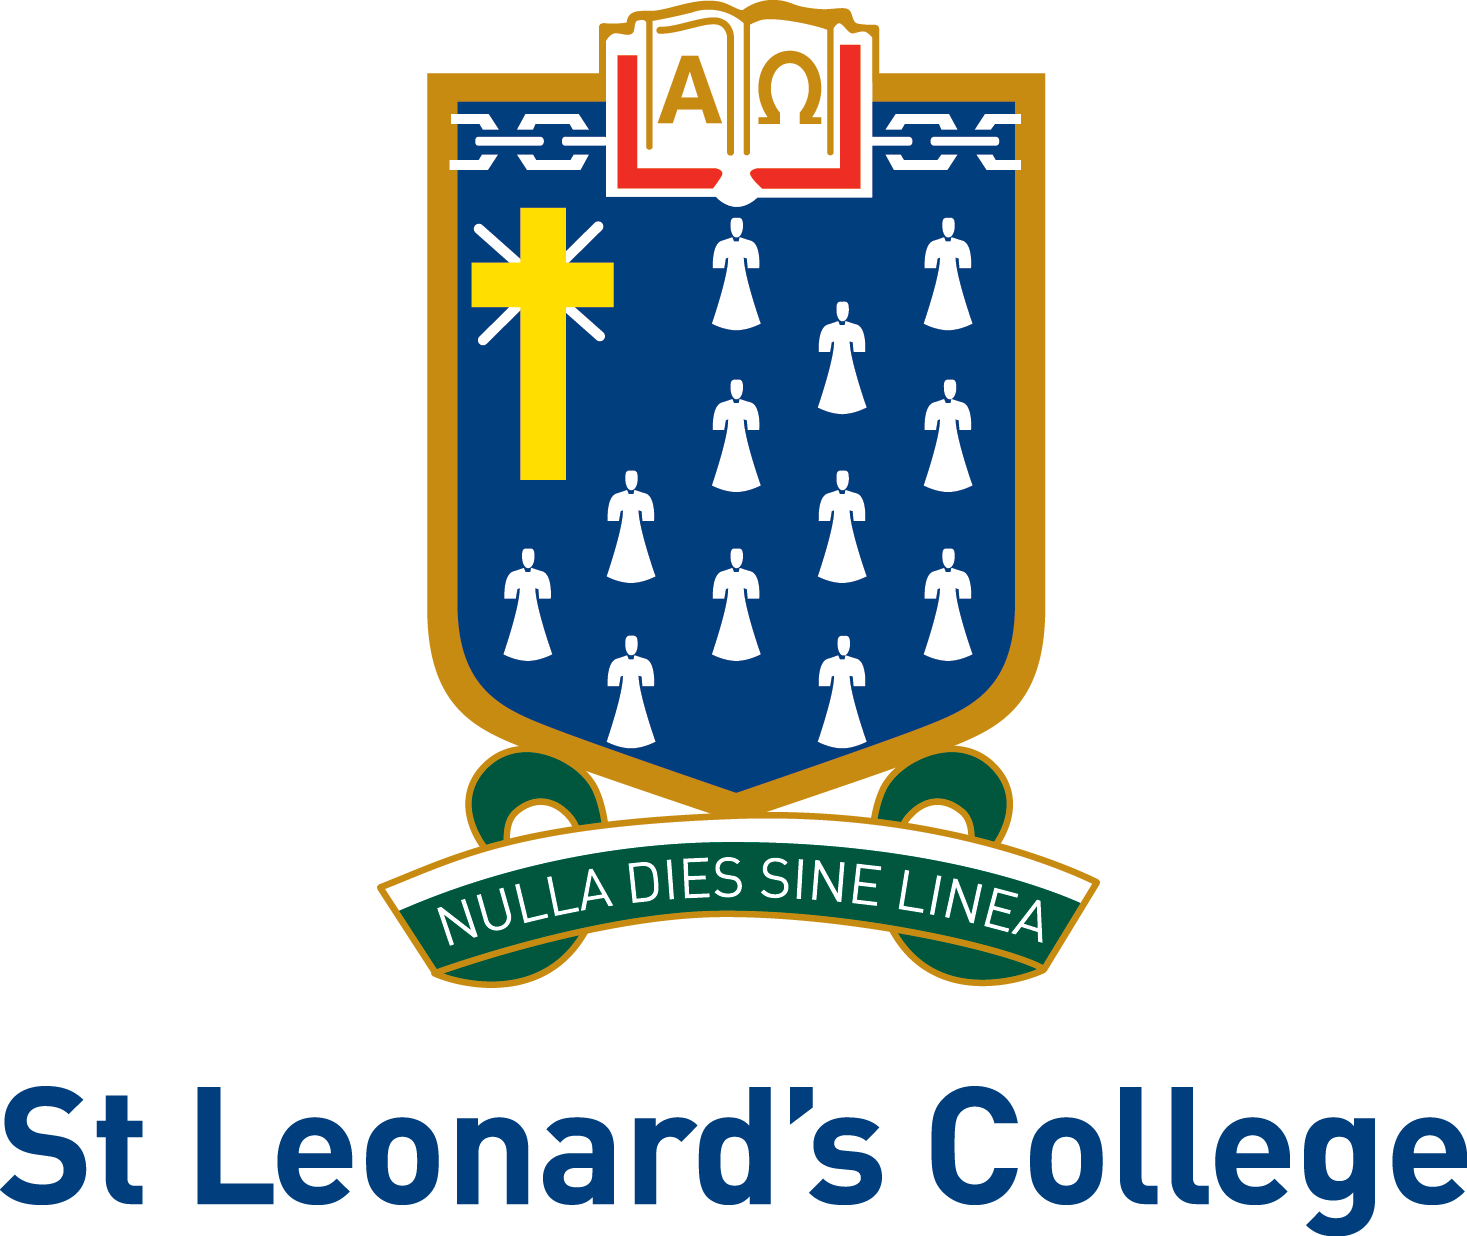 Self Photos / Files - St Leonards College_Logo